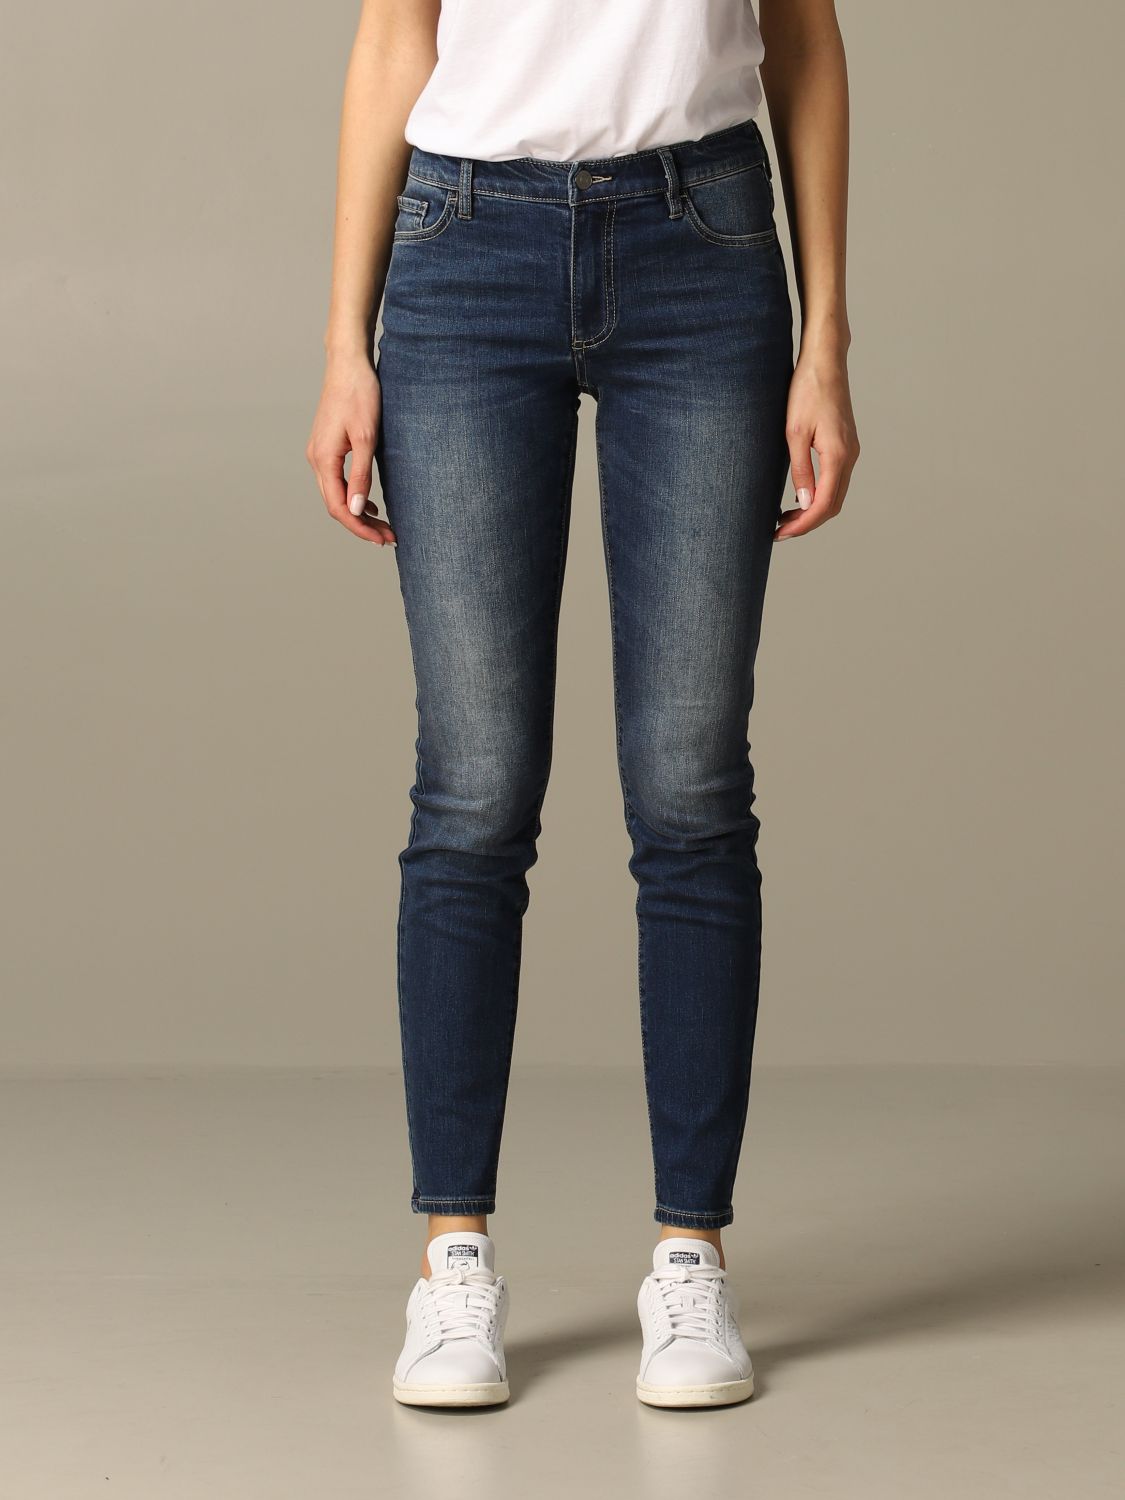 armani jeans skinny fit women's